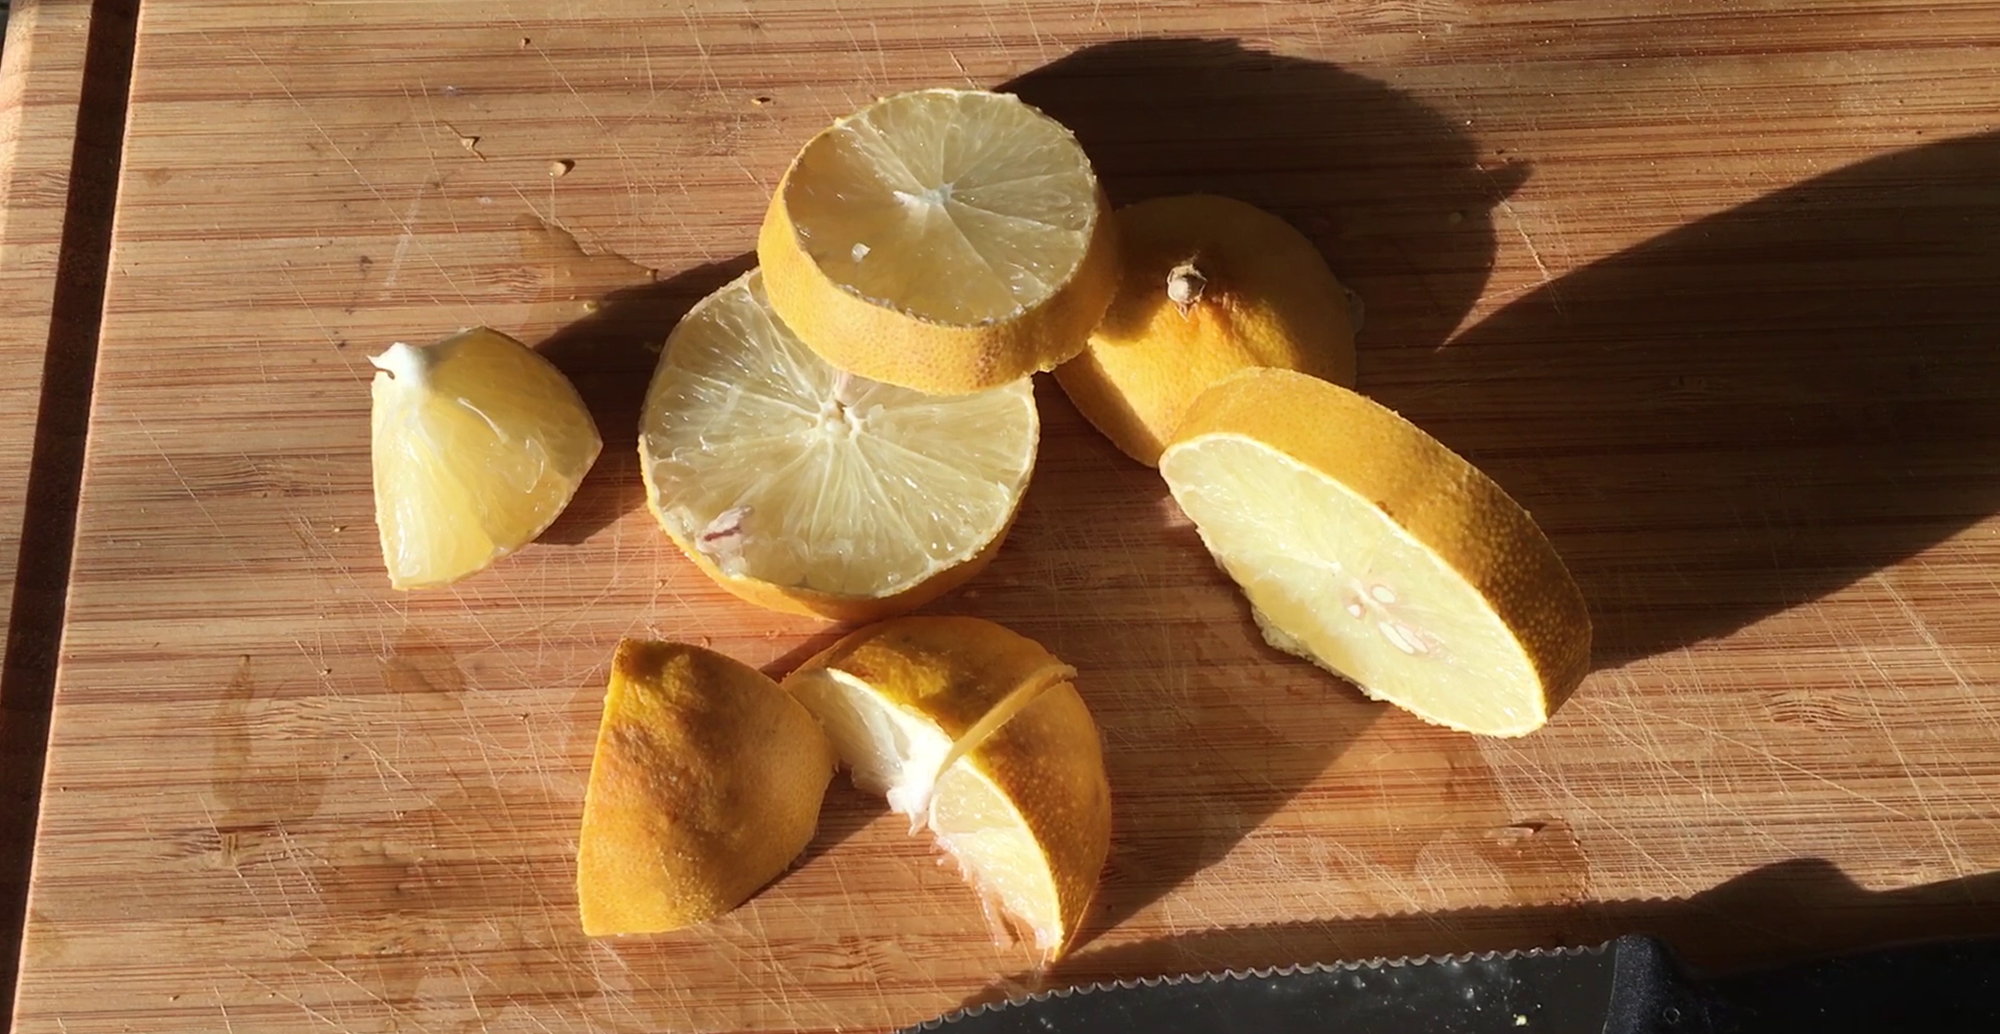 Des citrons en trop?